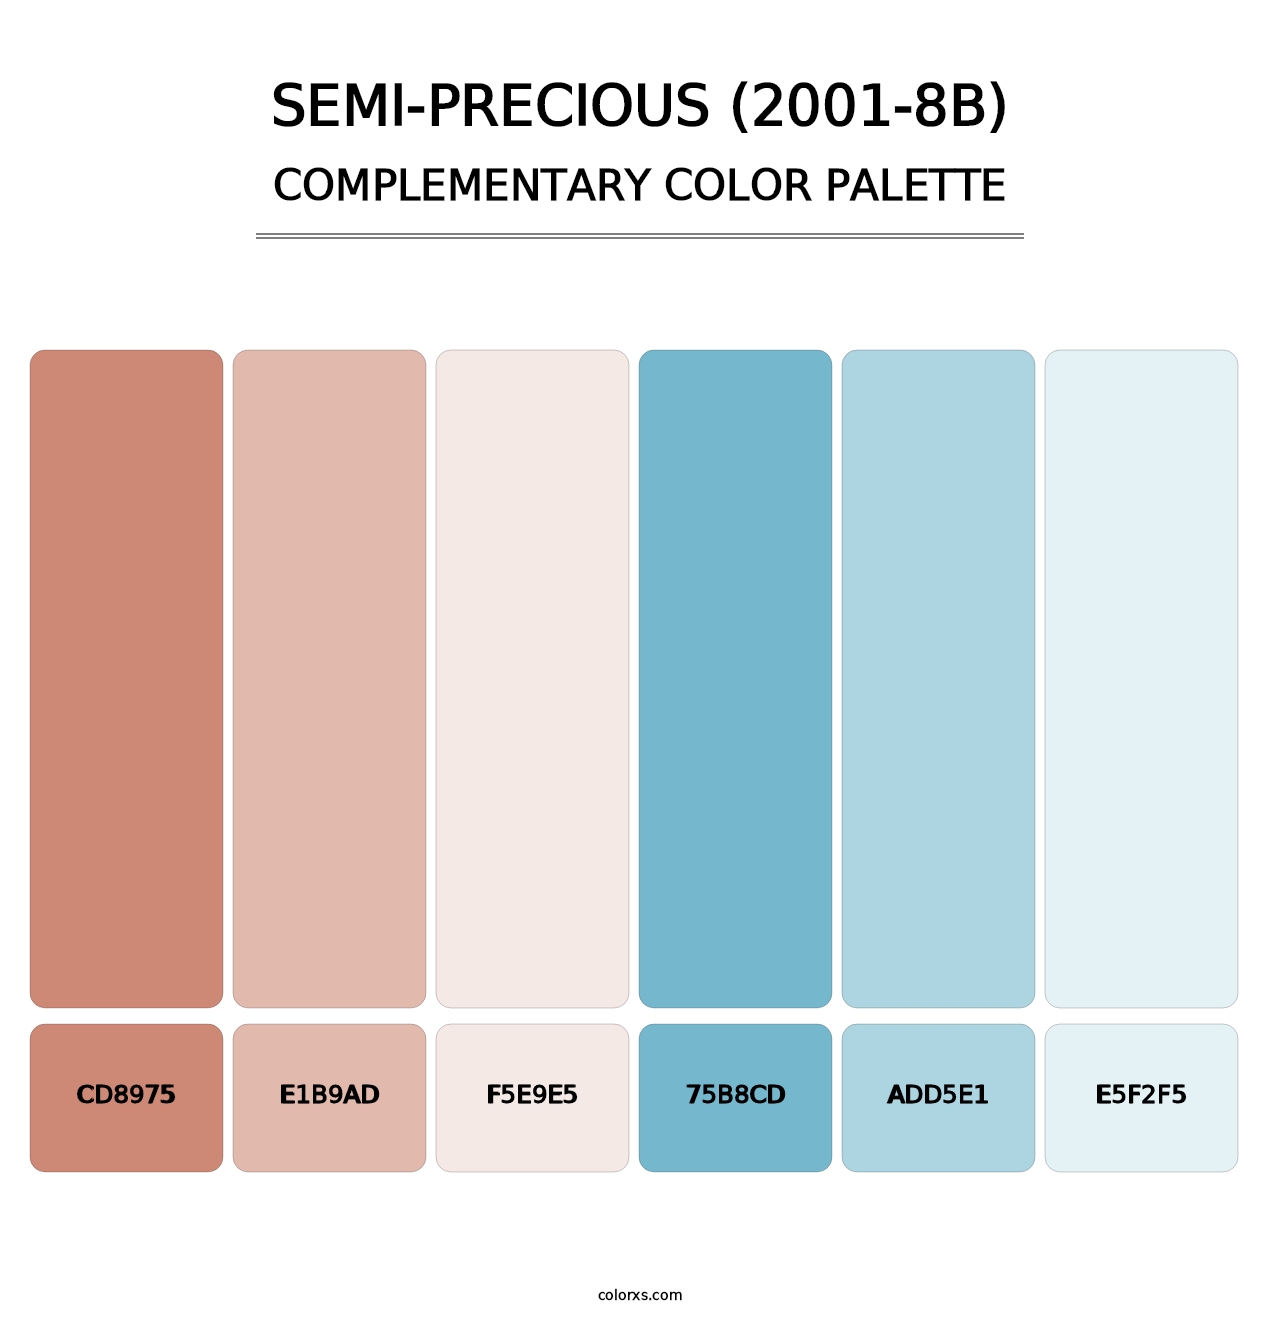 Semi-Precious (2001-8B) - Complementary Color Palette